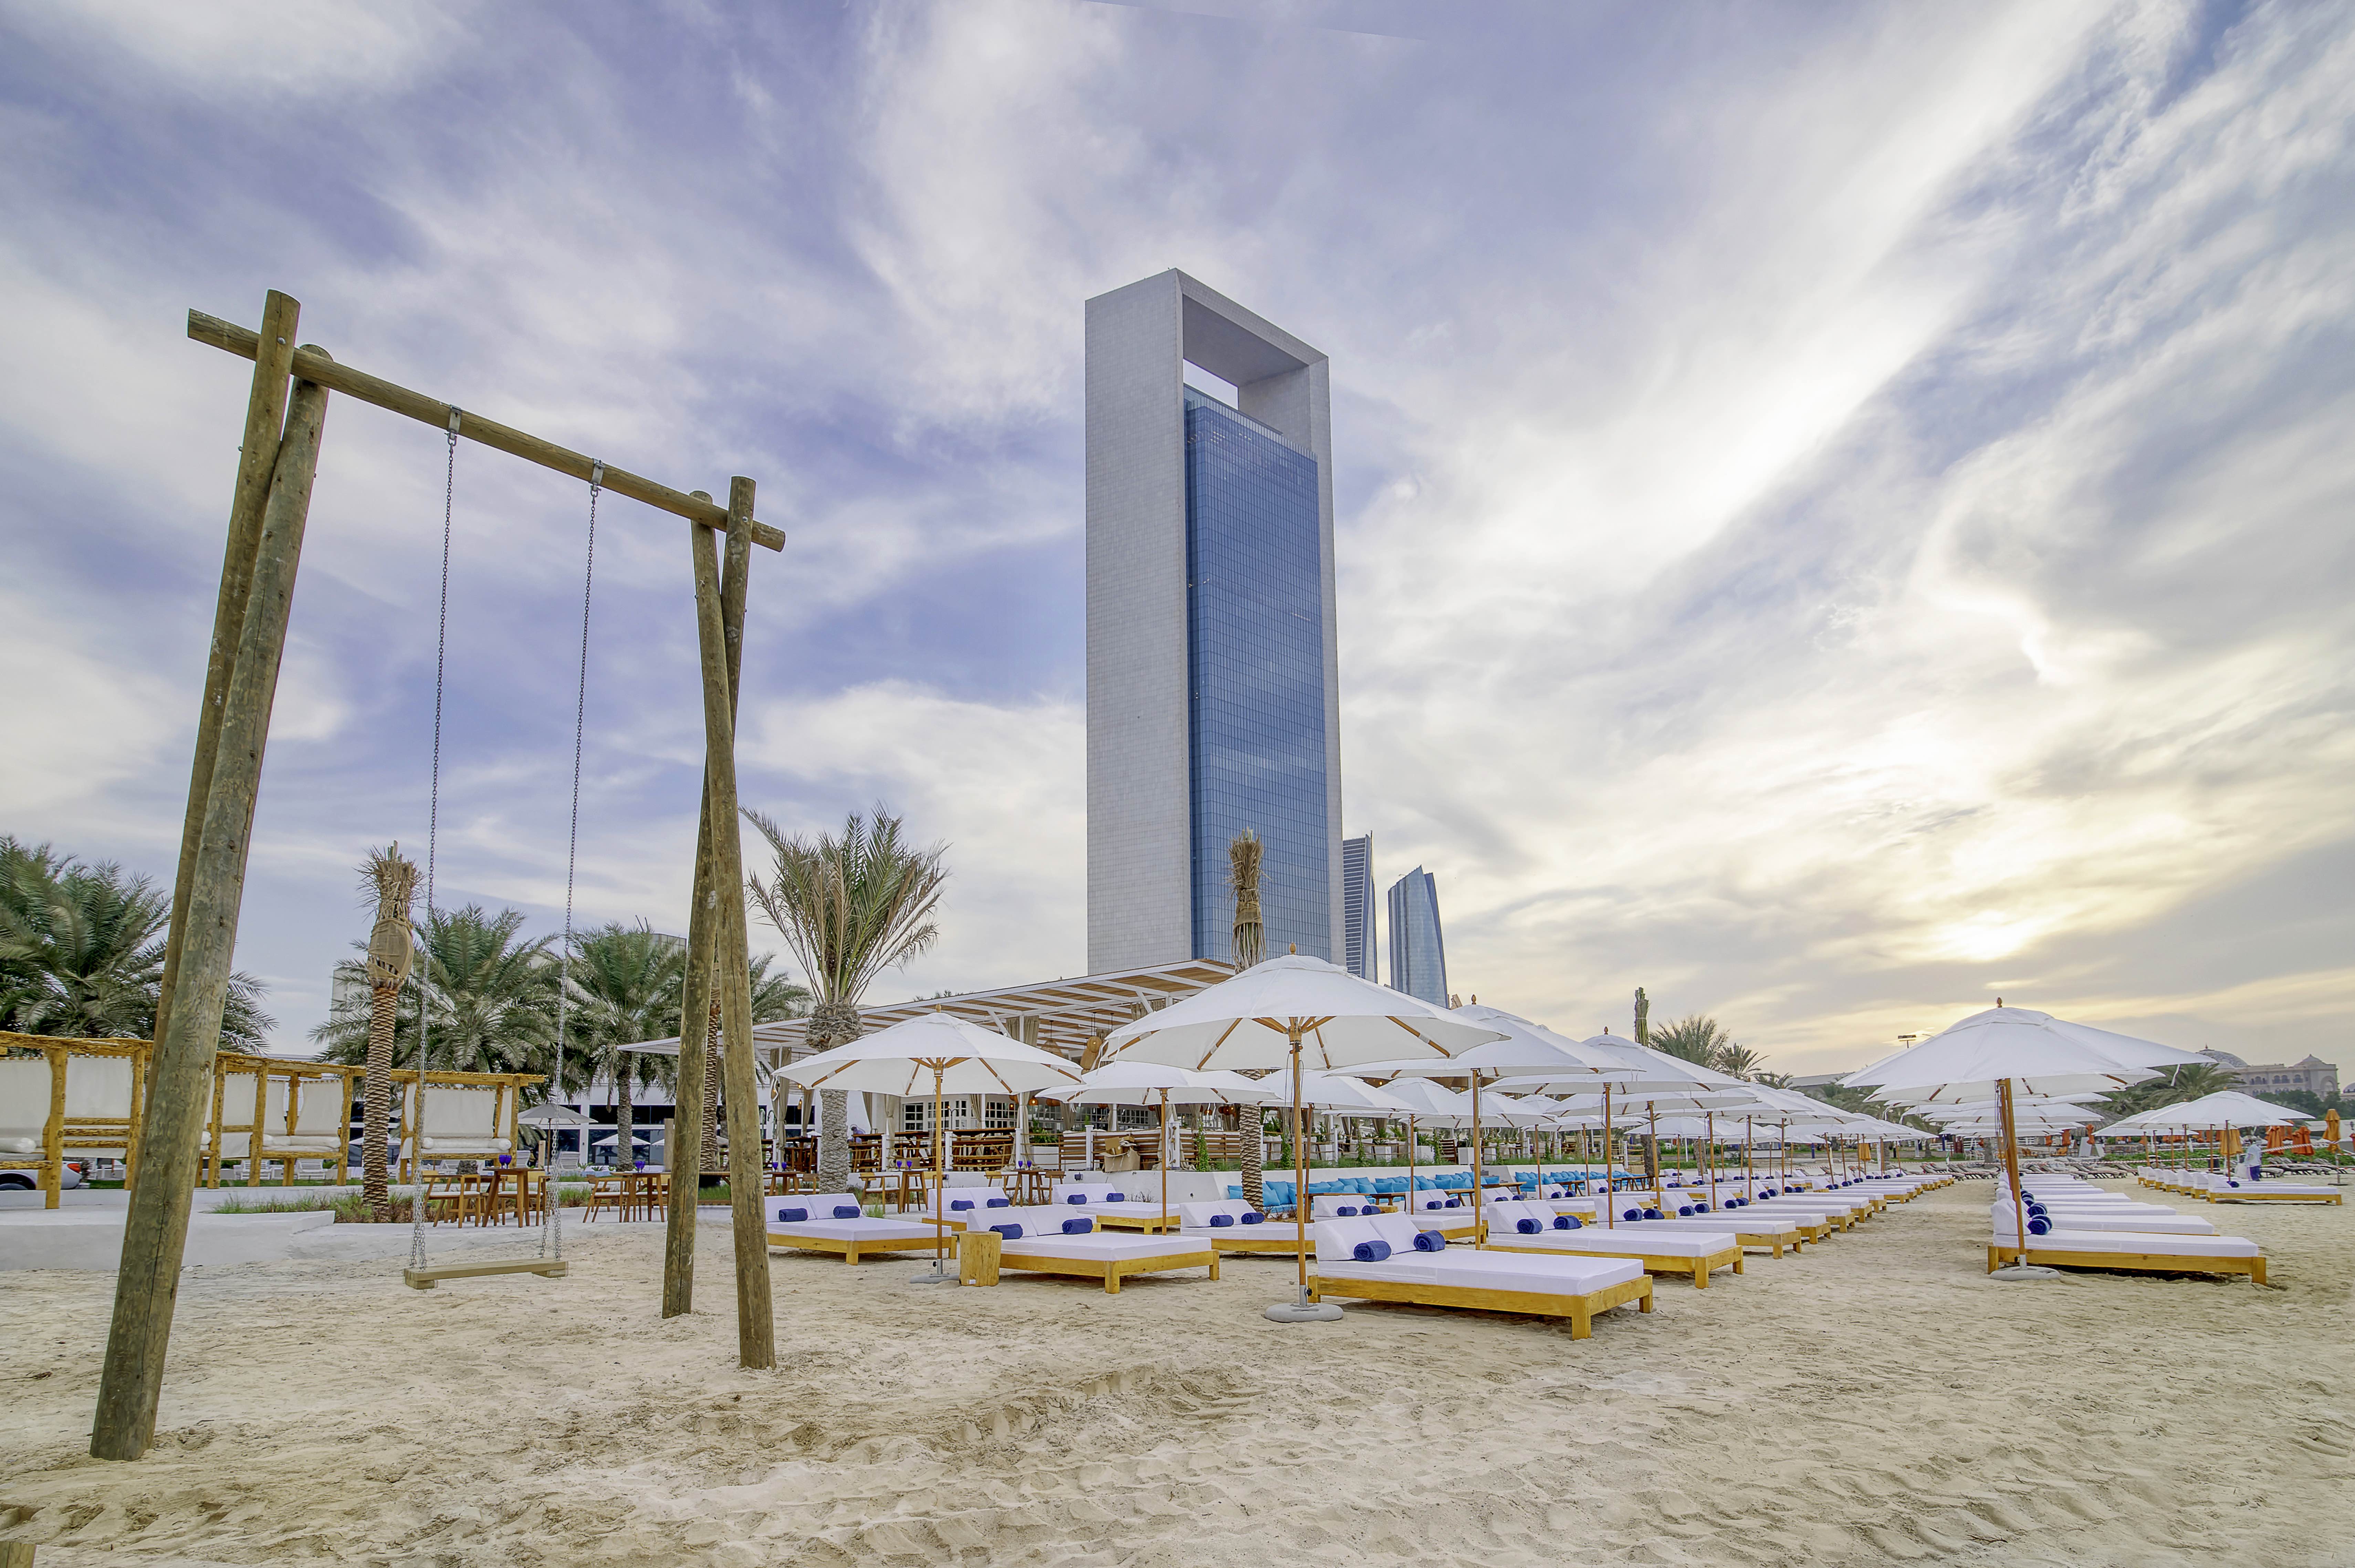 Radisson Blu Hotel &amp; Resort, Abu Dhabi Corniche